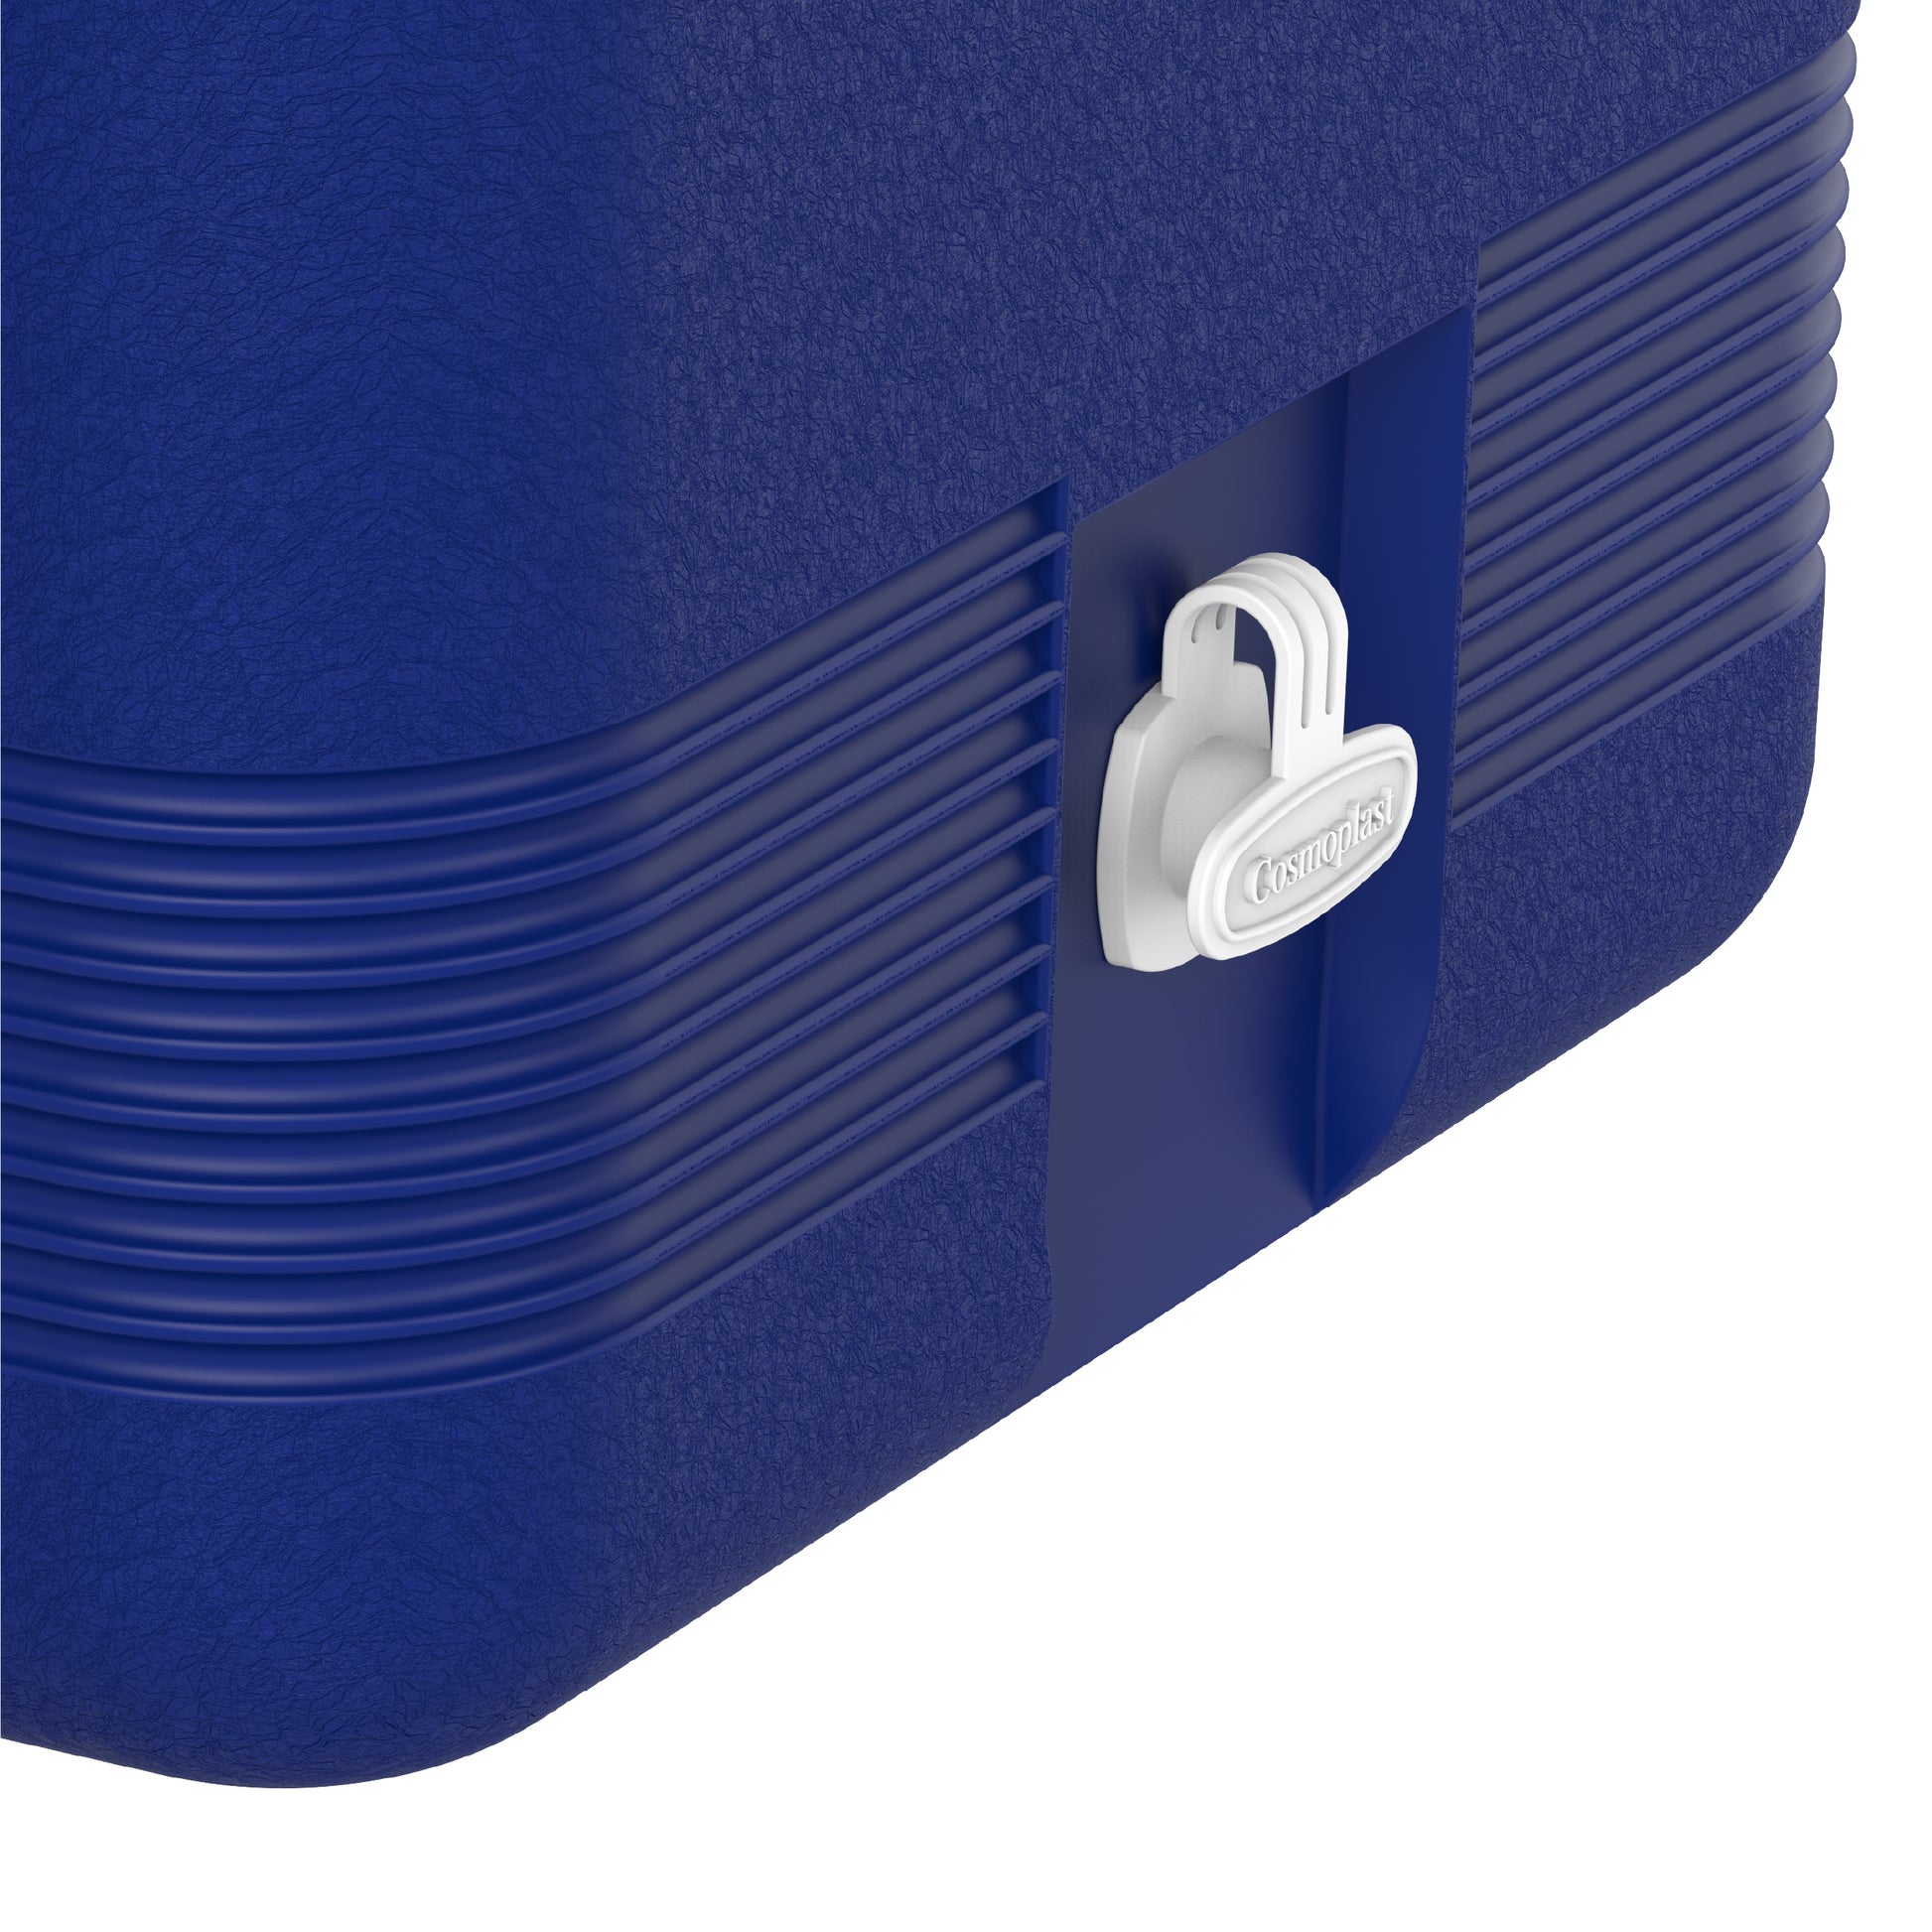 Cosmoplast UAE 40L KeepCold Deluxe Icebox